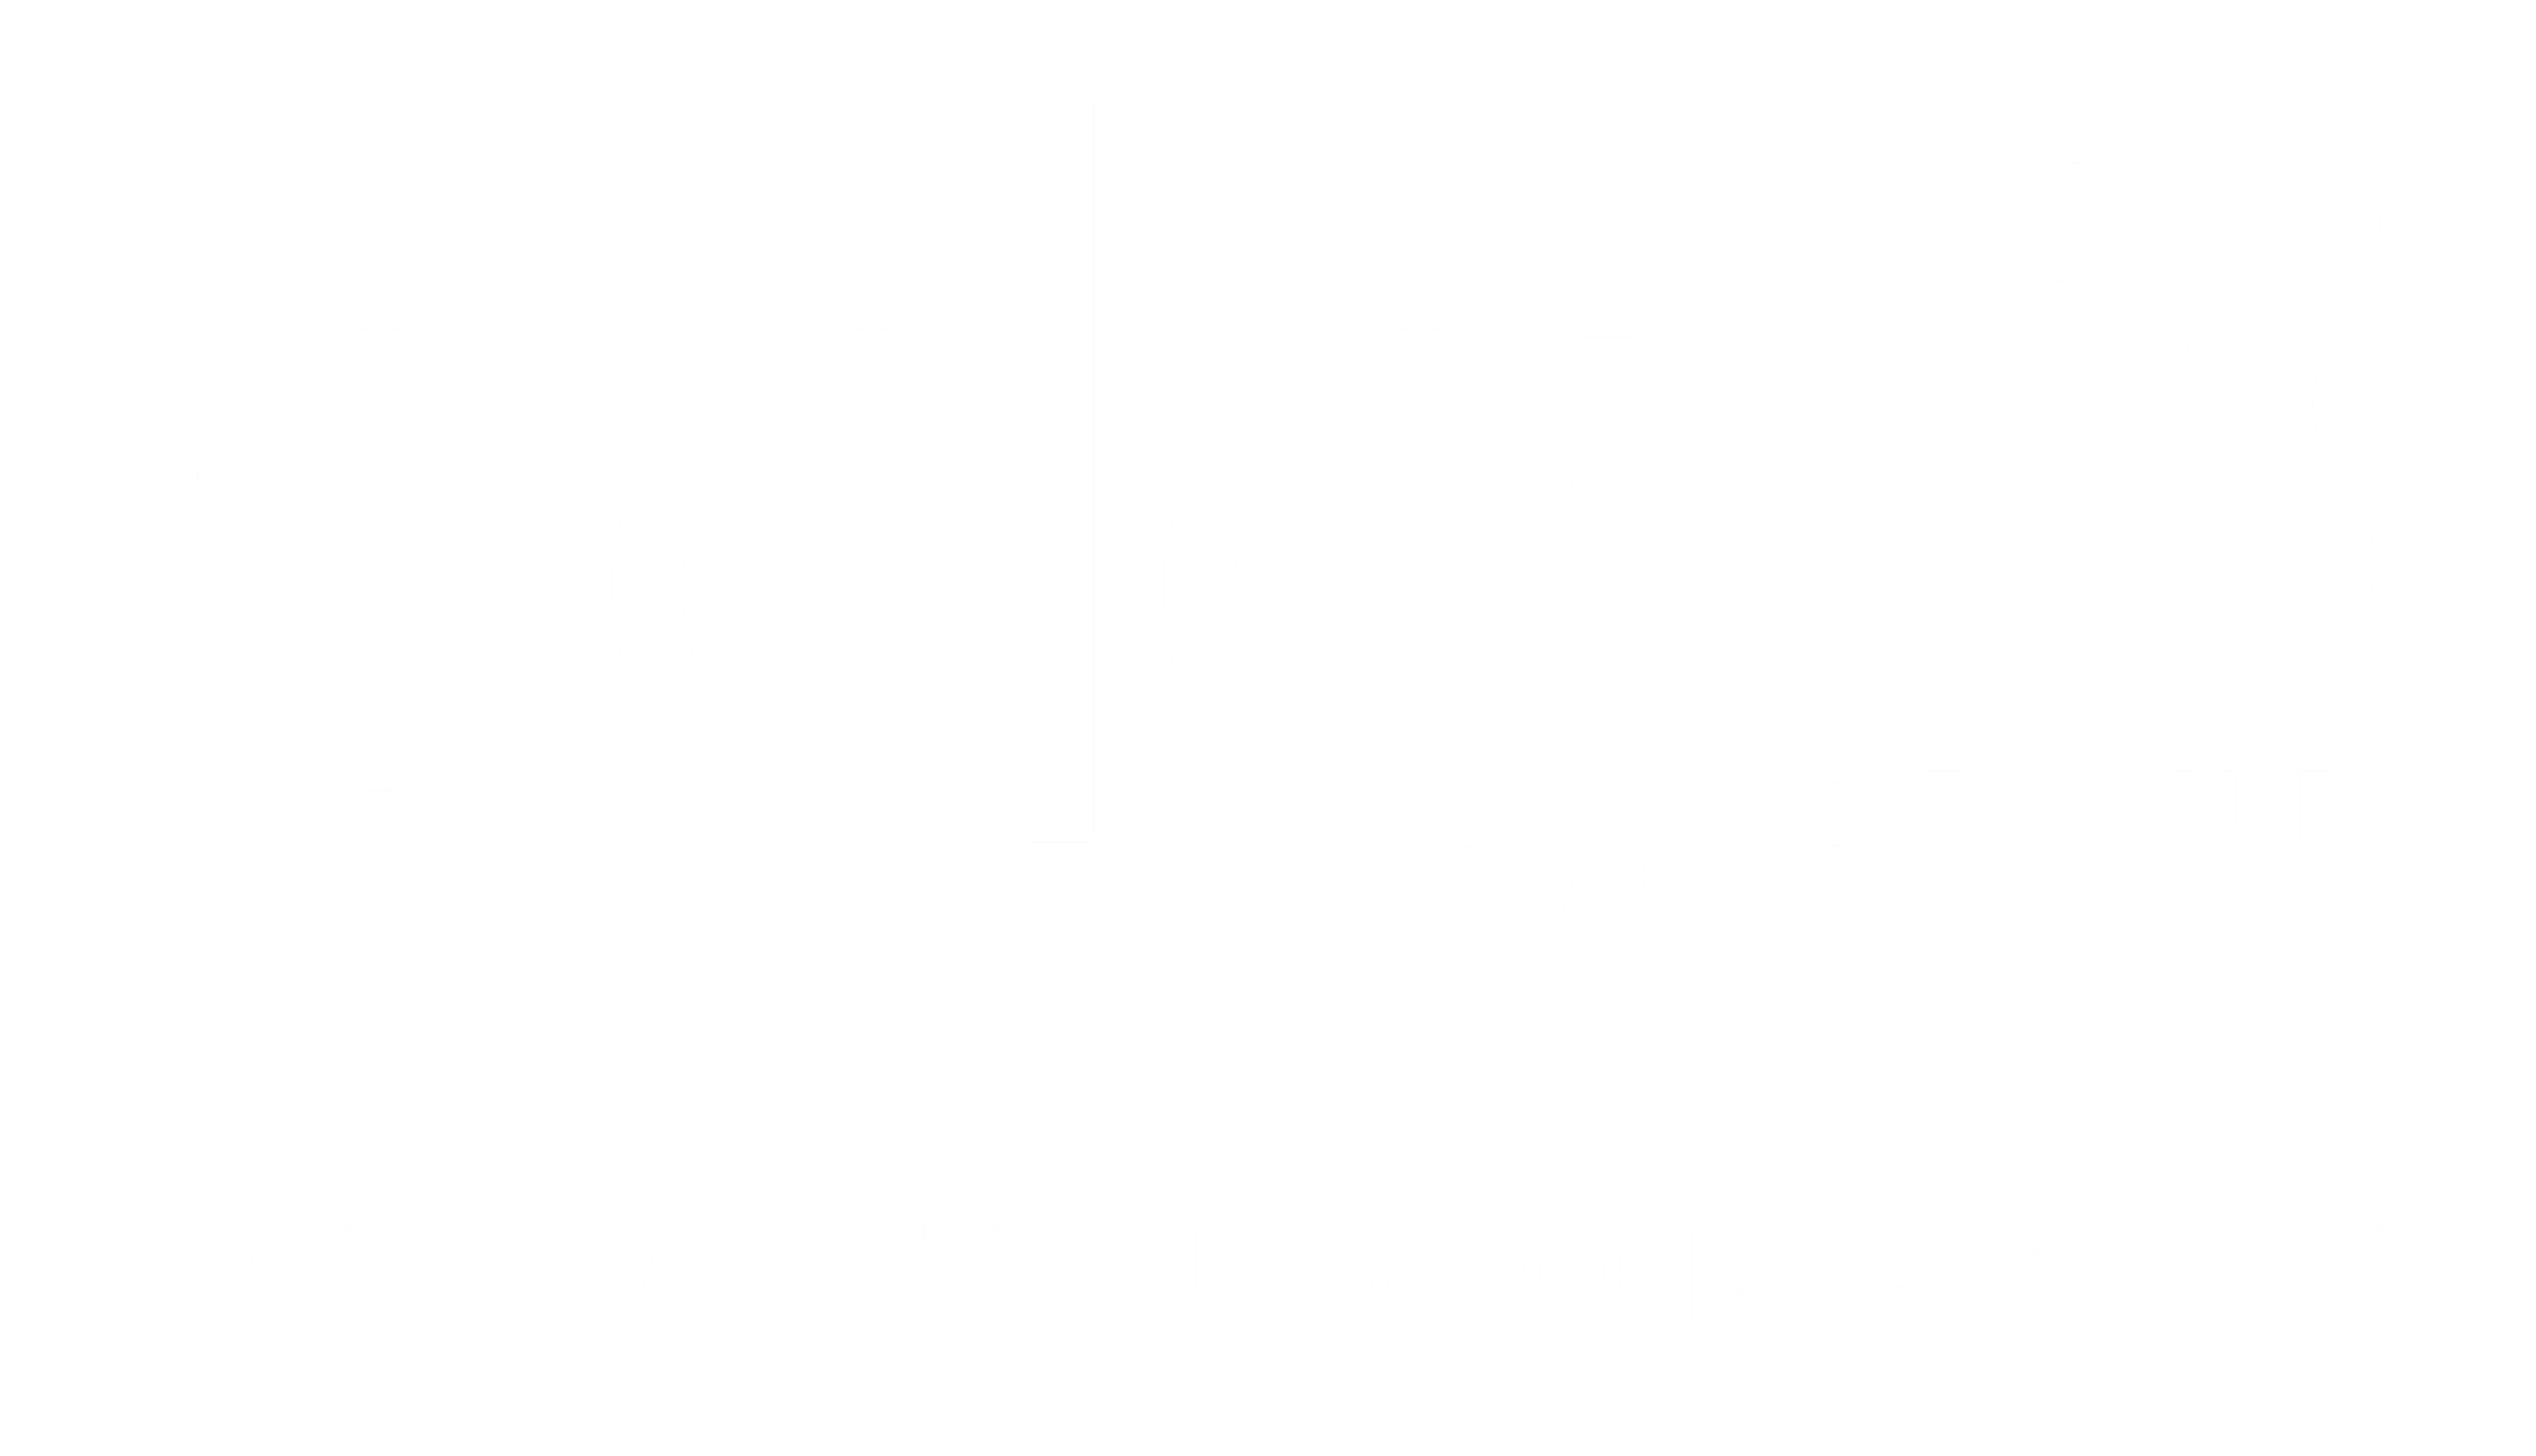 SDG Group - An Alten Company